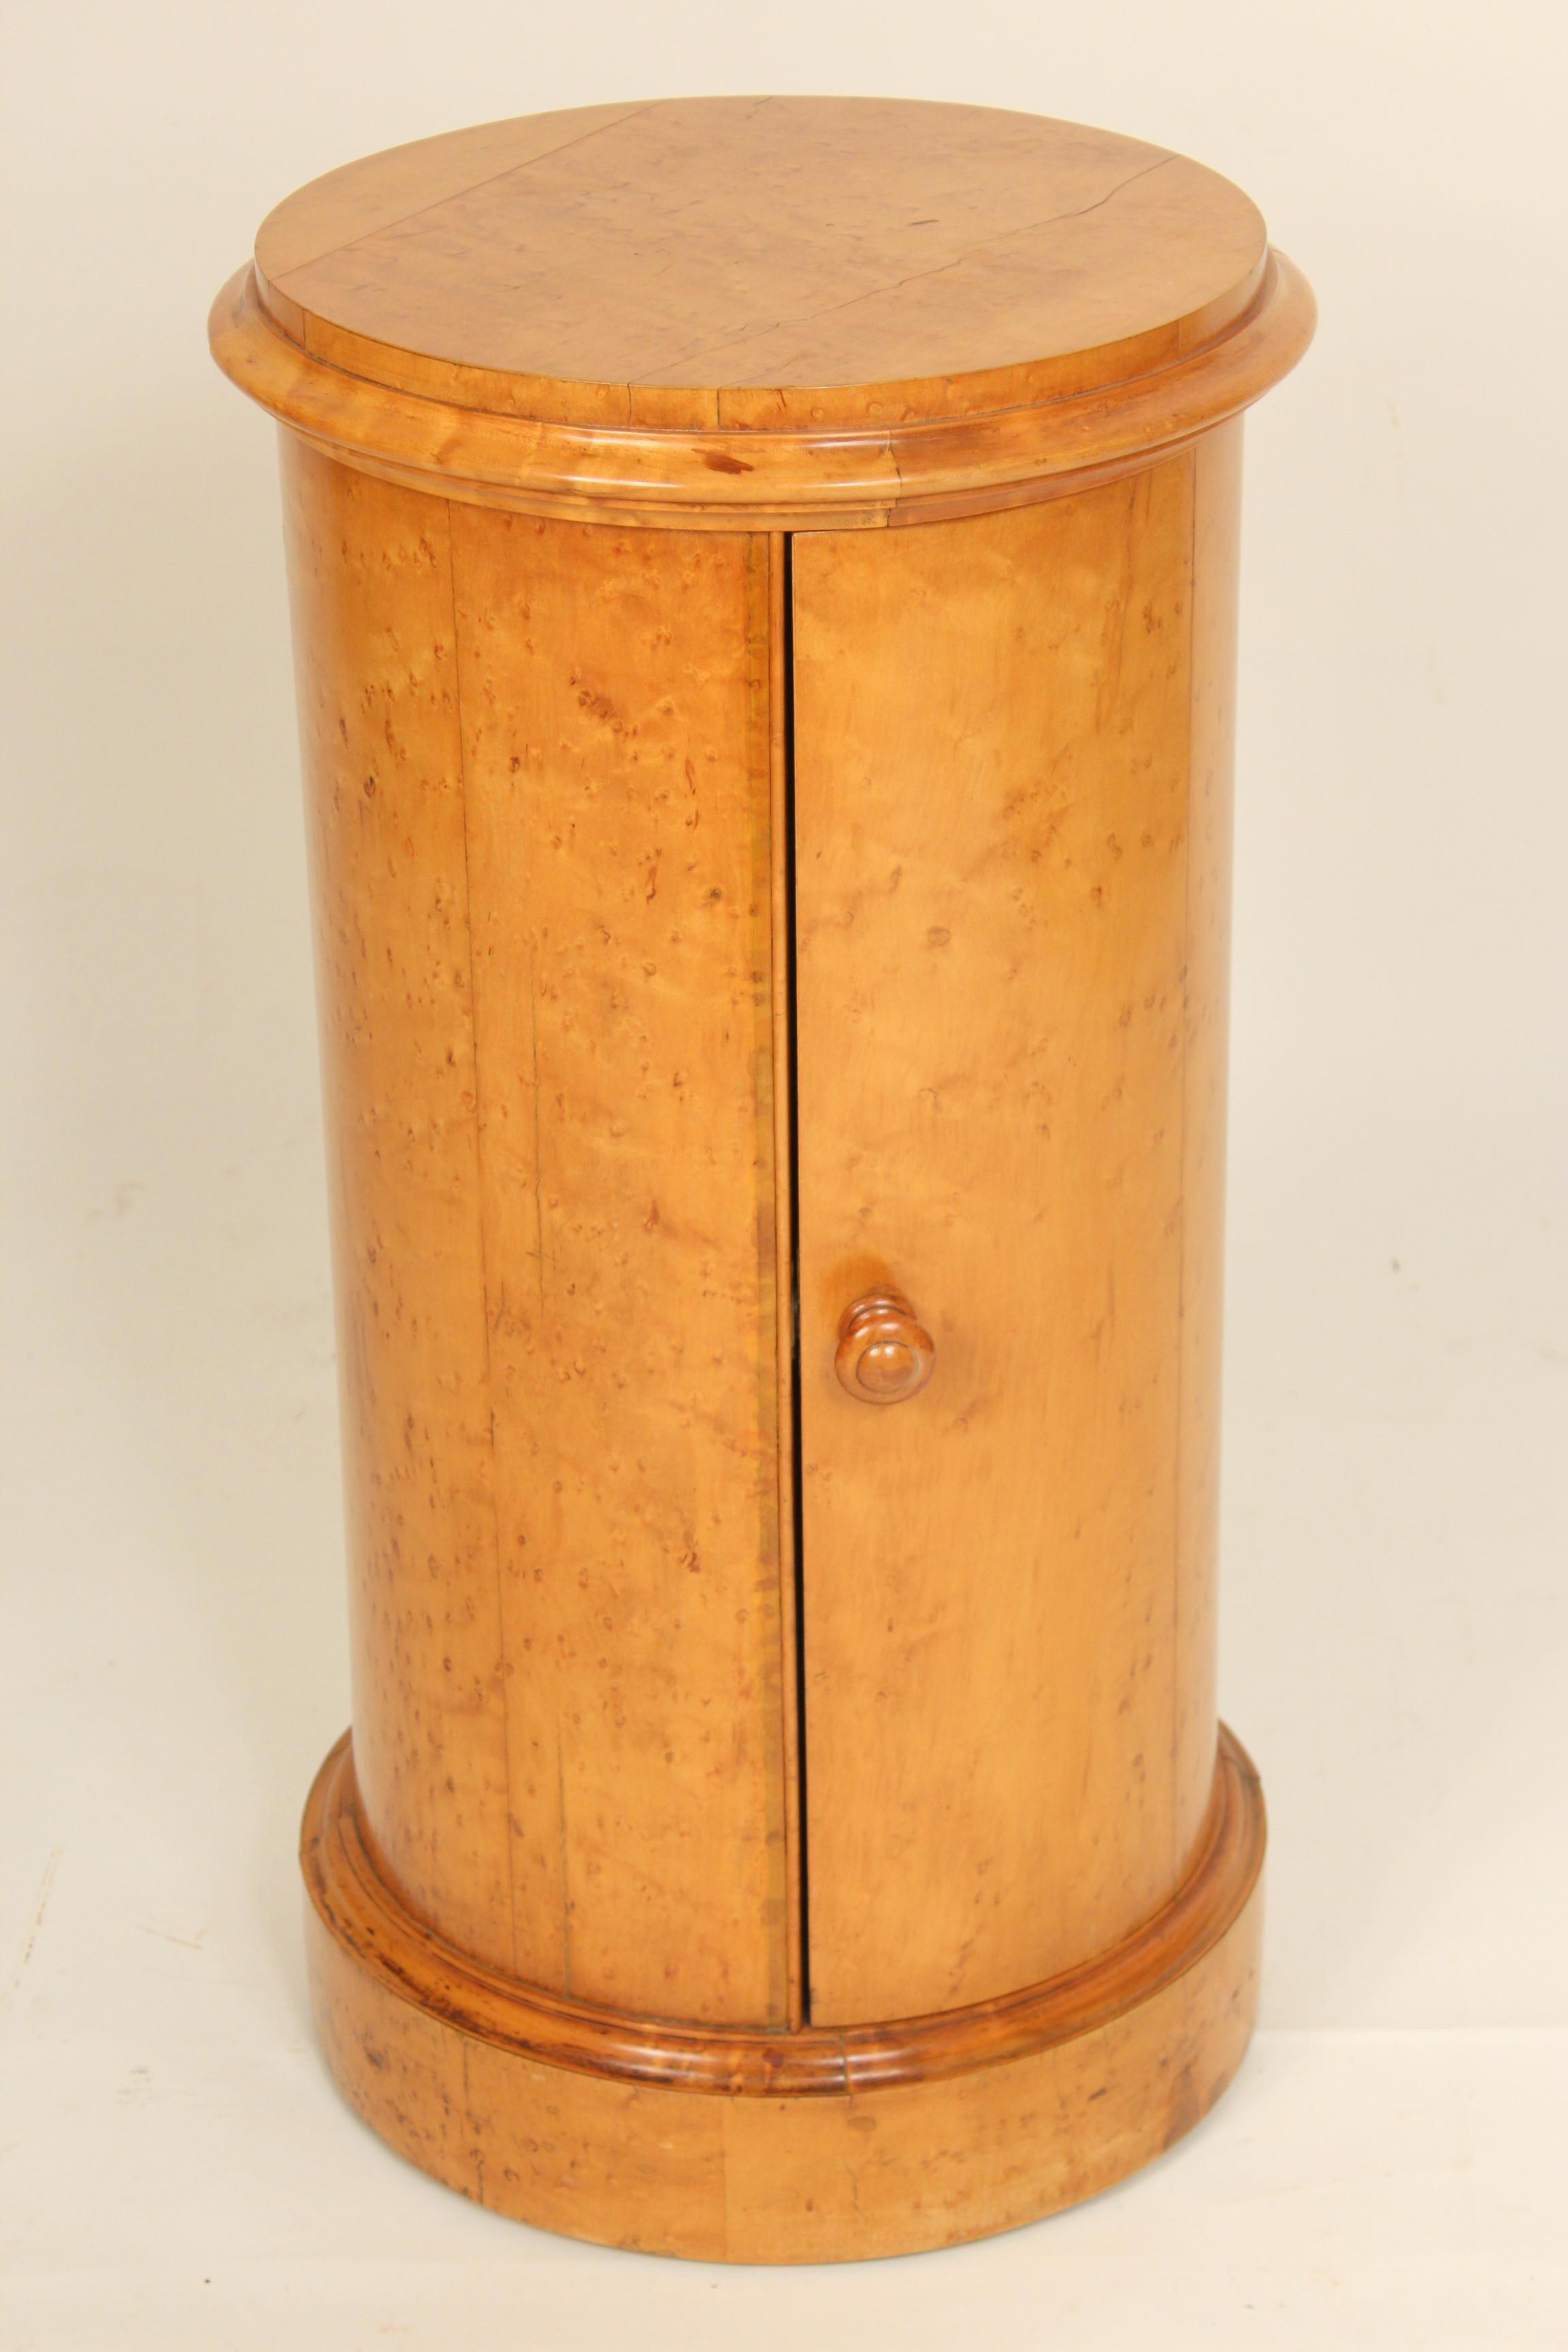 Antique Biedermeier style burl ash single door cylinder commode / pedestal, circa 1900. The overall diameter is 16